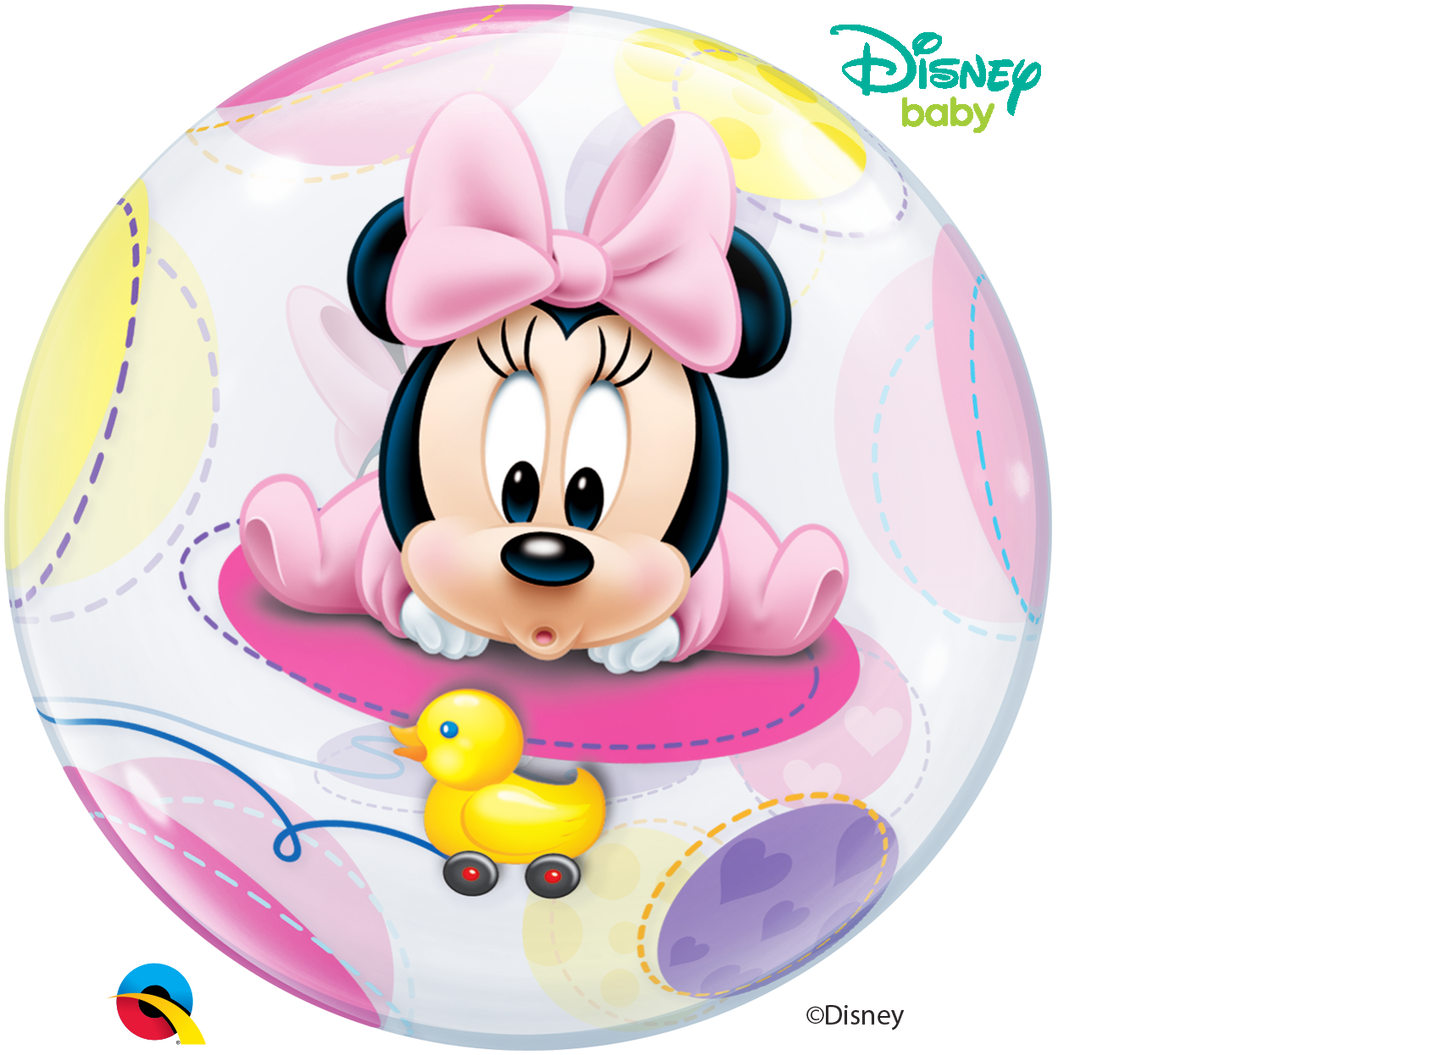 Disney Bébé Minnie Mouse